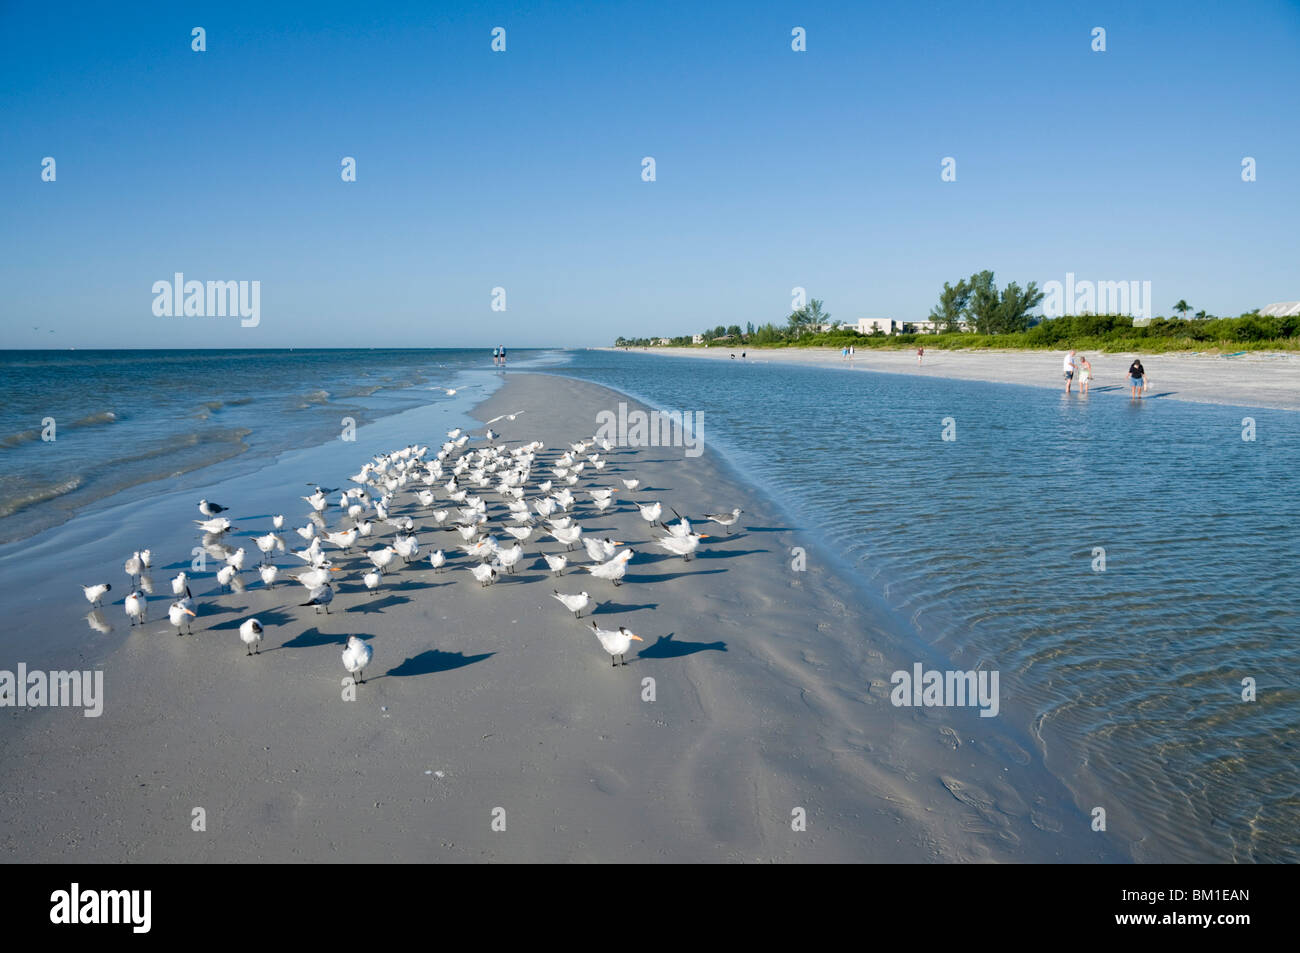 Royal tern birds on beach, Sanibel Island, Gulf Coast, Florida, United States of America, North America Stock Photo